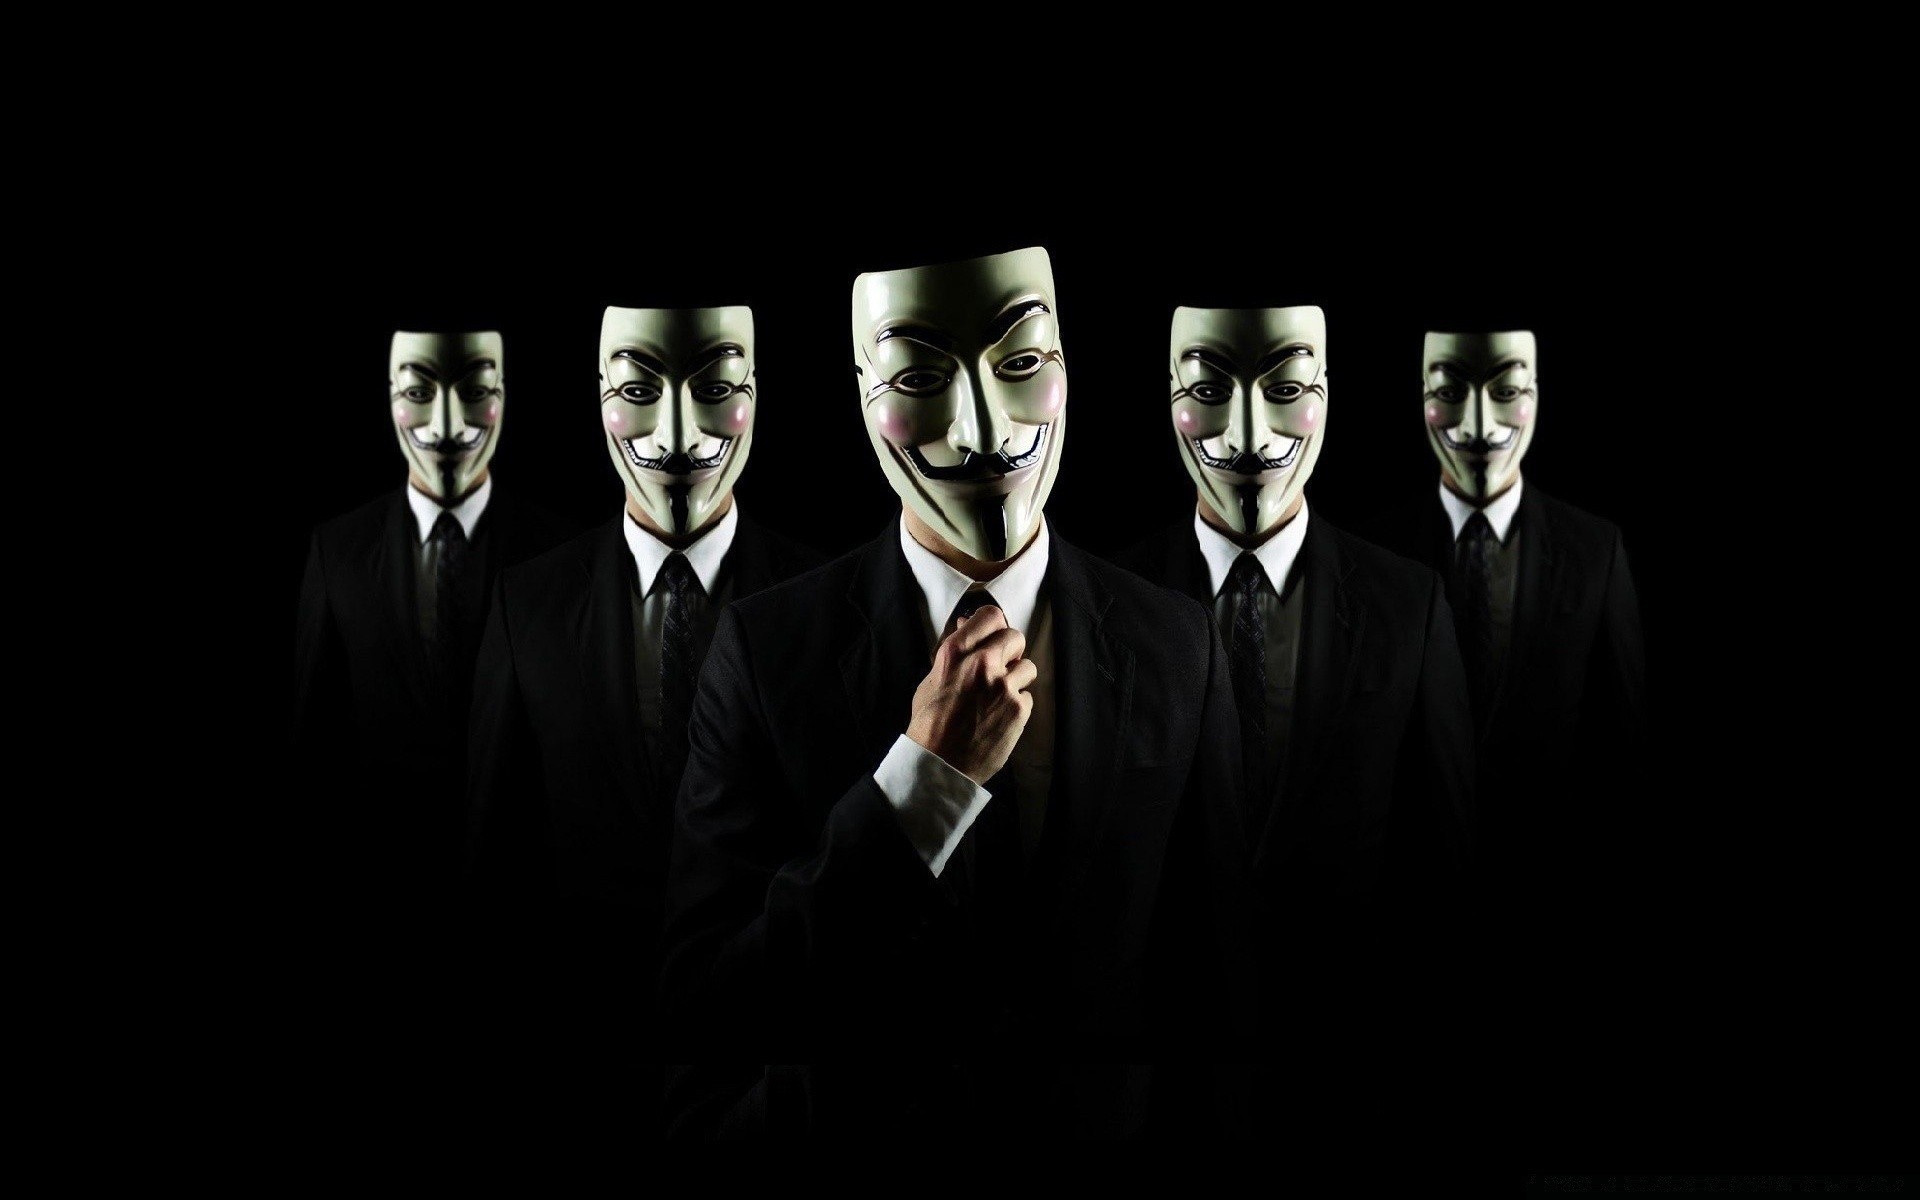 digital technology portrait man business adult mask face anonymous tie actor